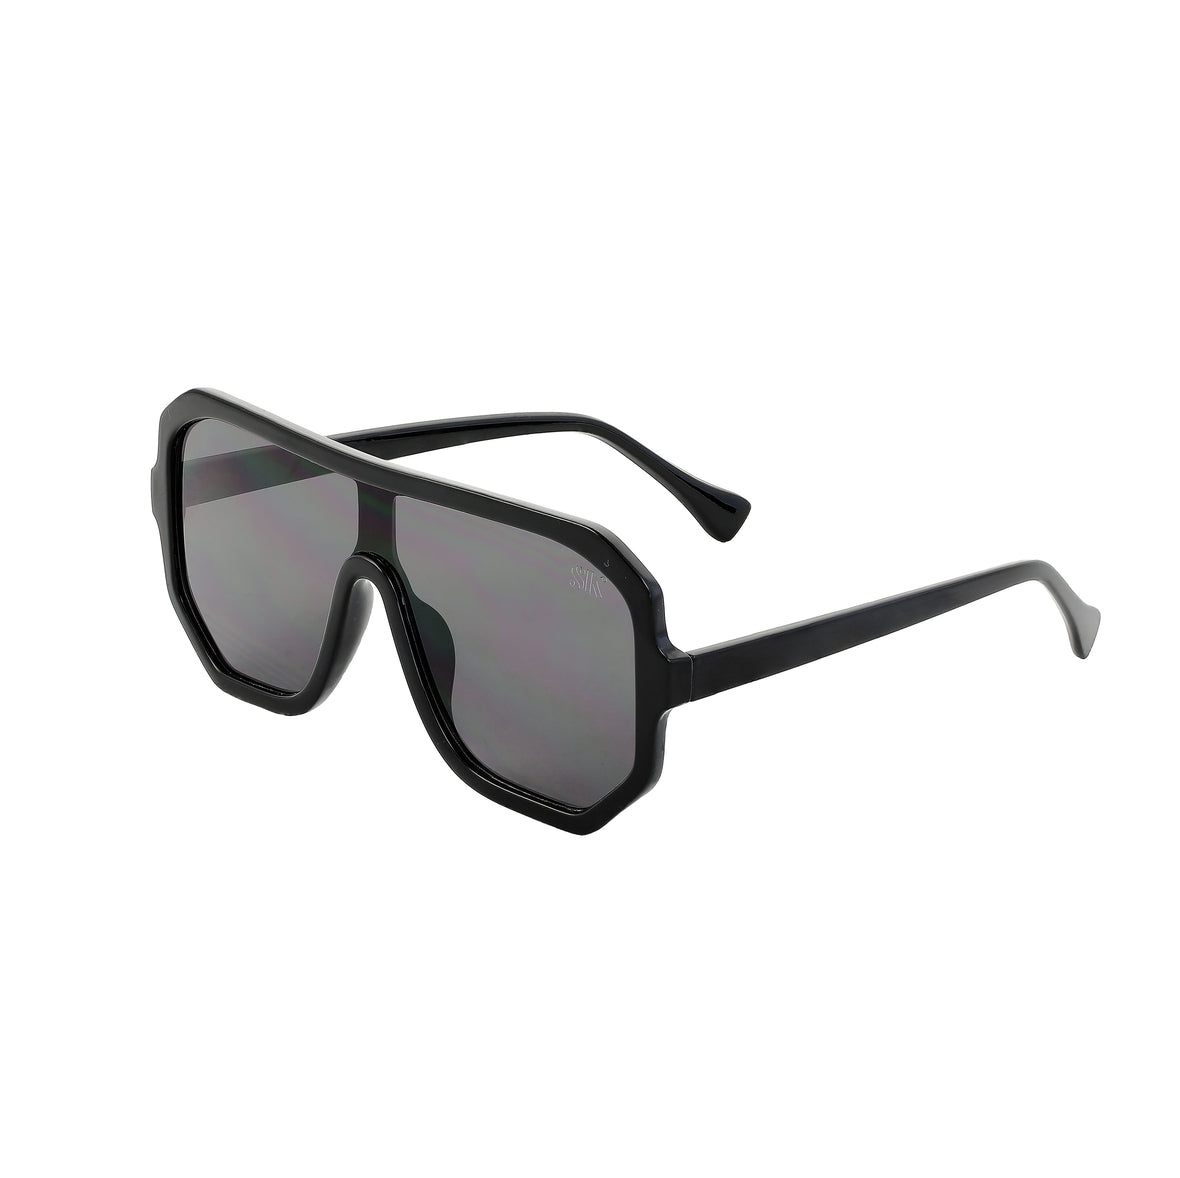 Exclusive Shade Black Sunglasses